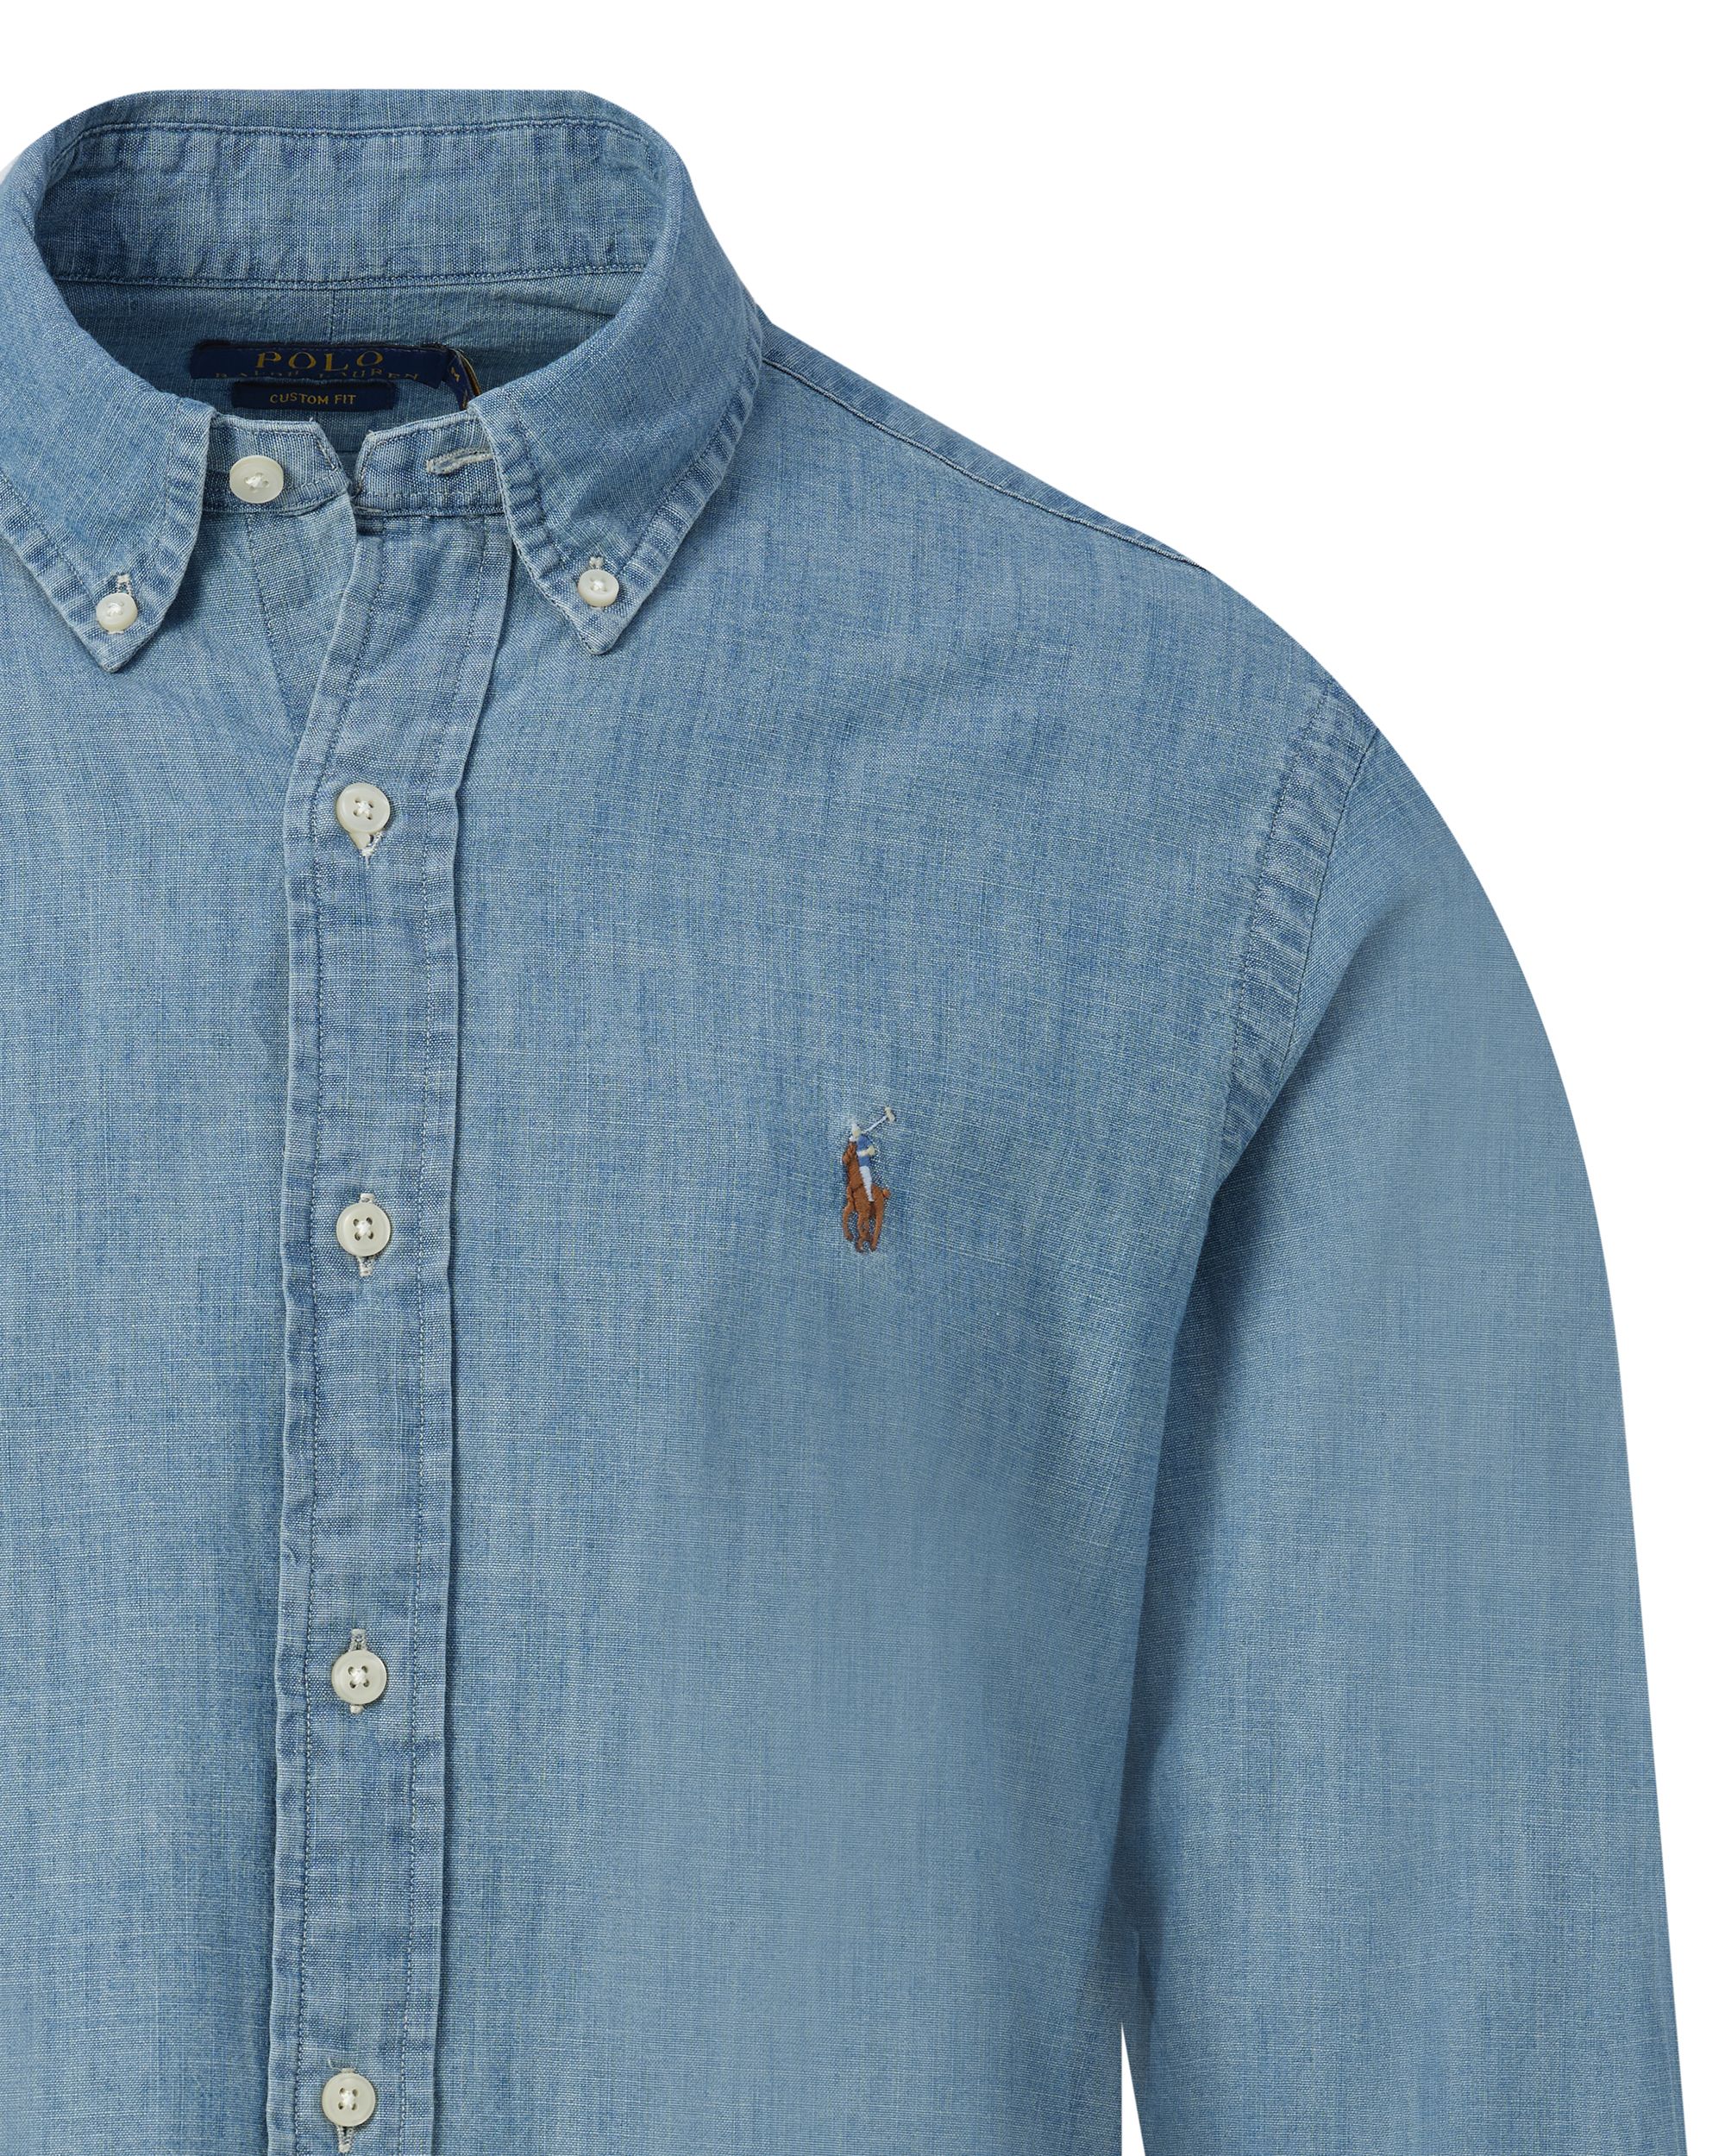 Polo Ralph Lauren Casual Overhemd LM Blauw 086675-001-L